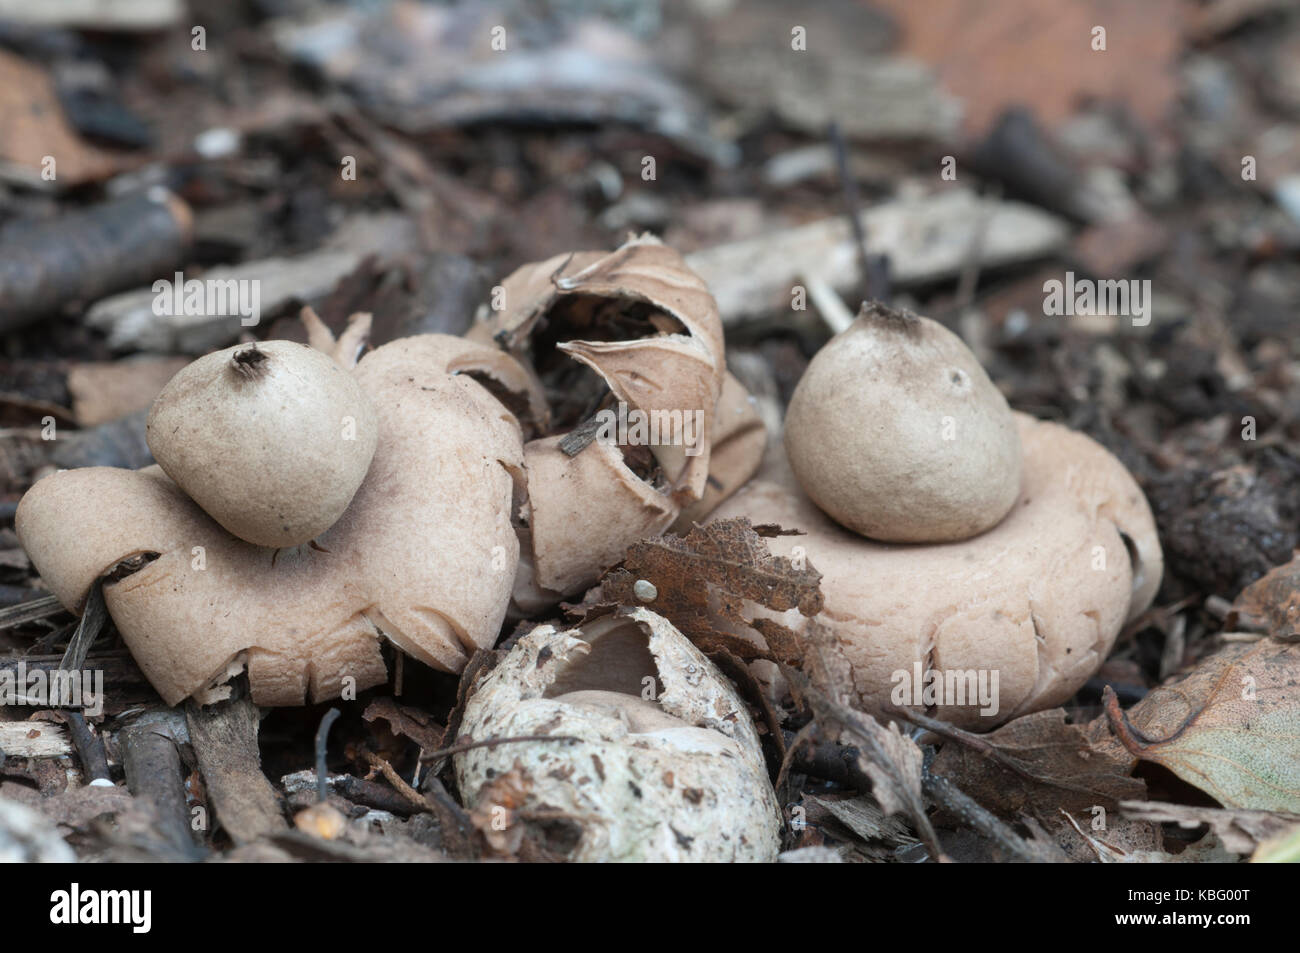 Fringed earthstar (Geastrum fimbriatum) mushroom close up shot Stock Photo